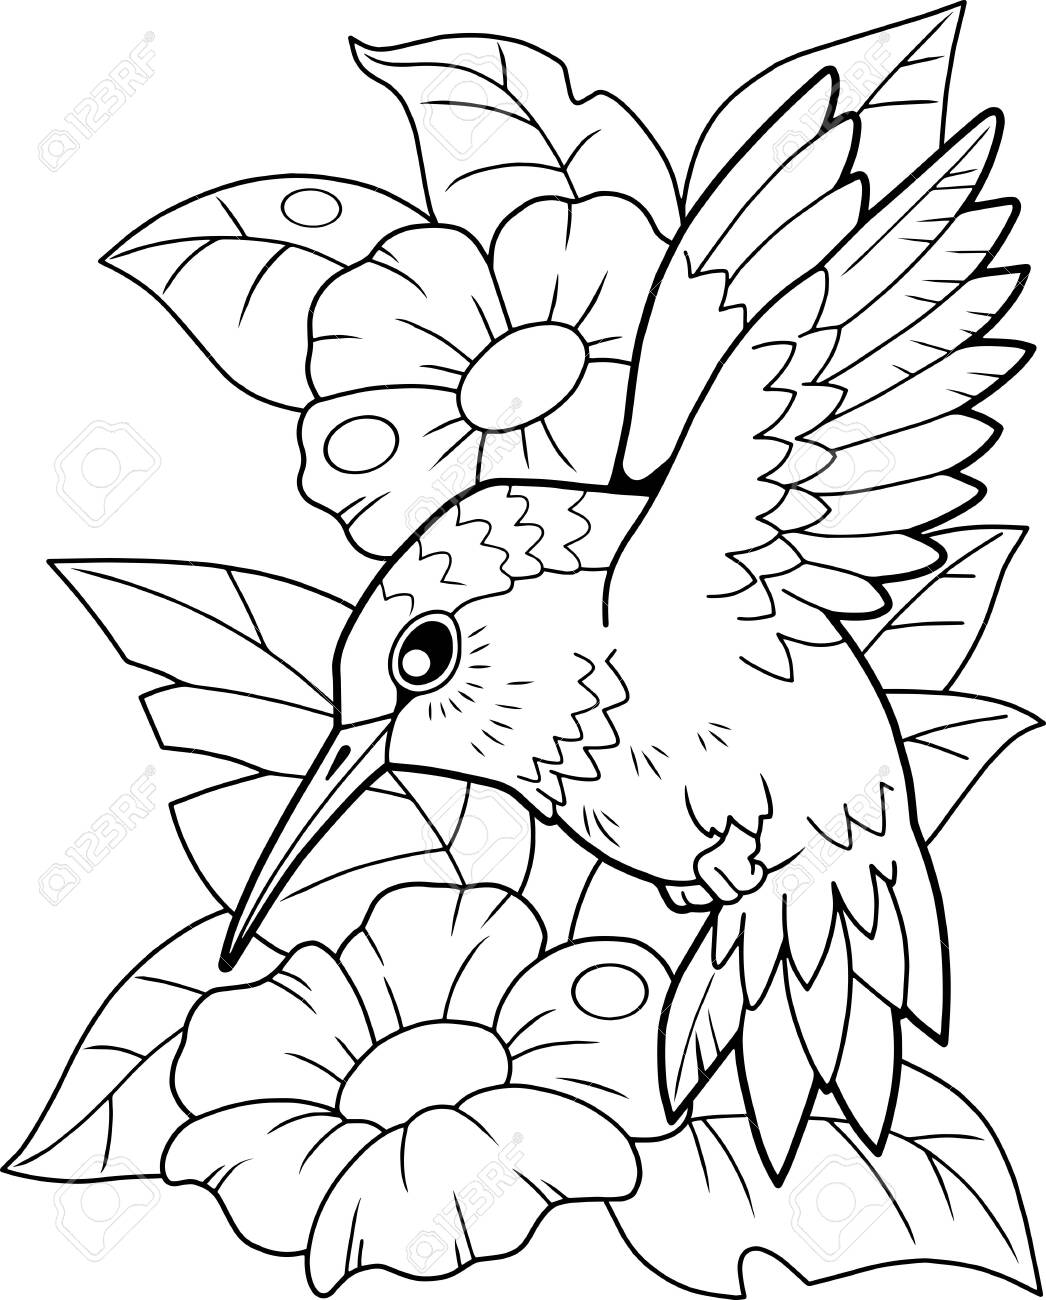 Cartoon cute hummingbird bird coloring book funny illustration royalty free svg cliparts vectors and stock illustration image